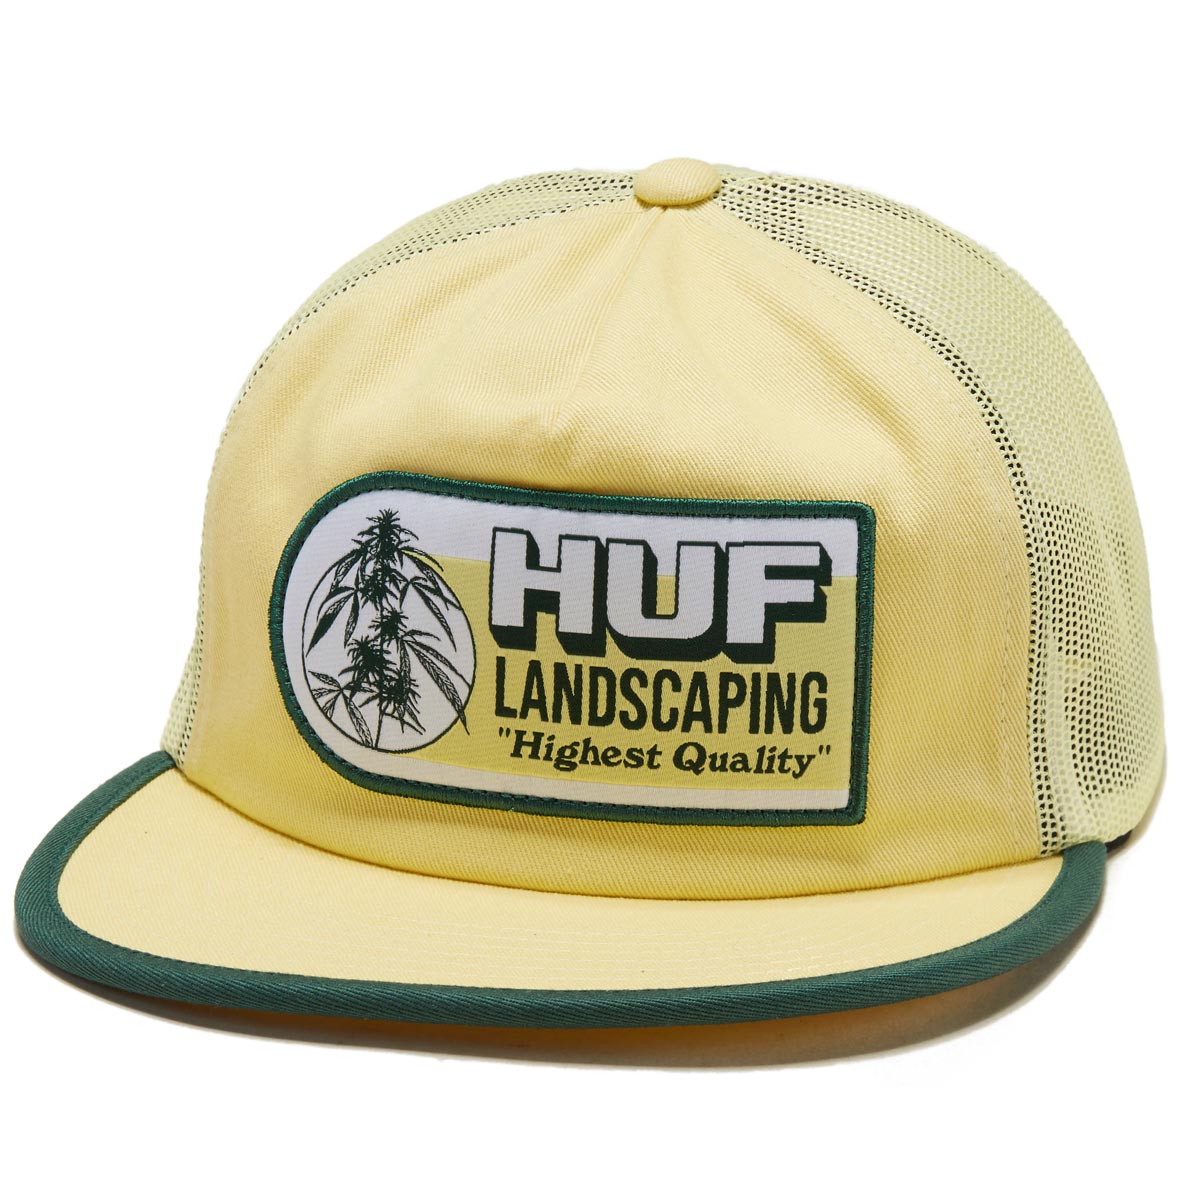 Huf Landscaping Trucker Hat - Yellow